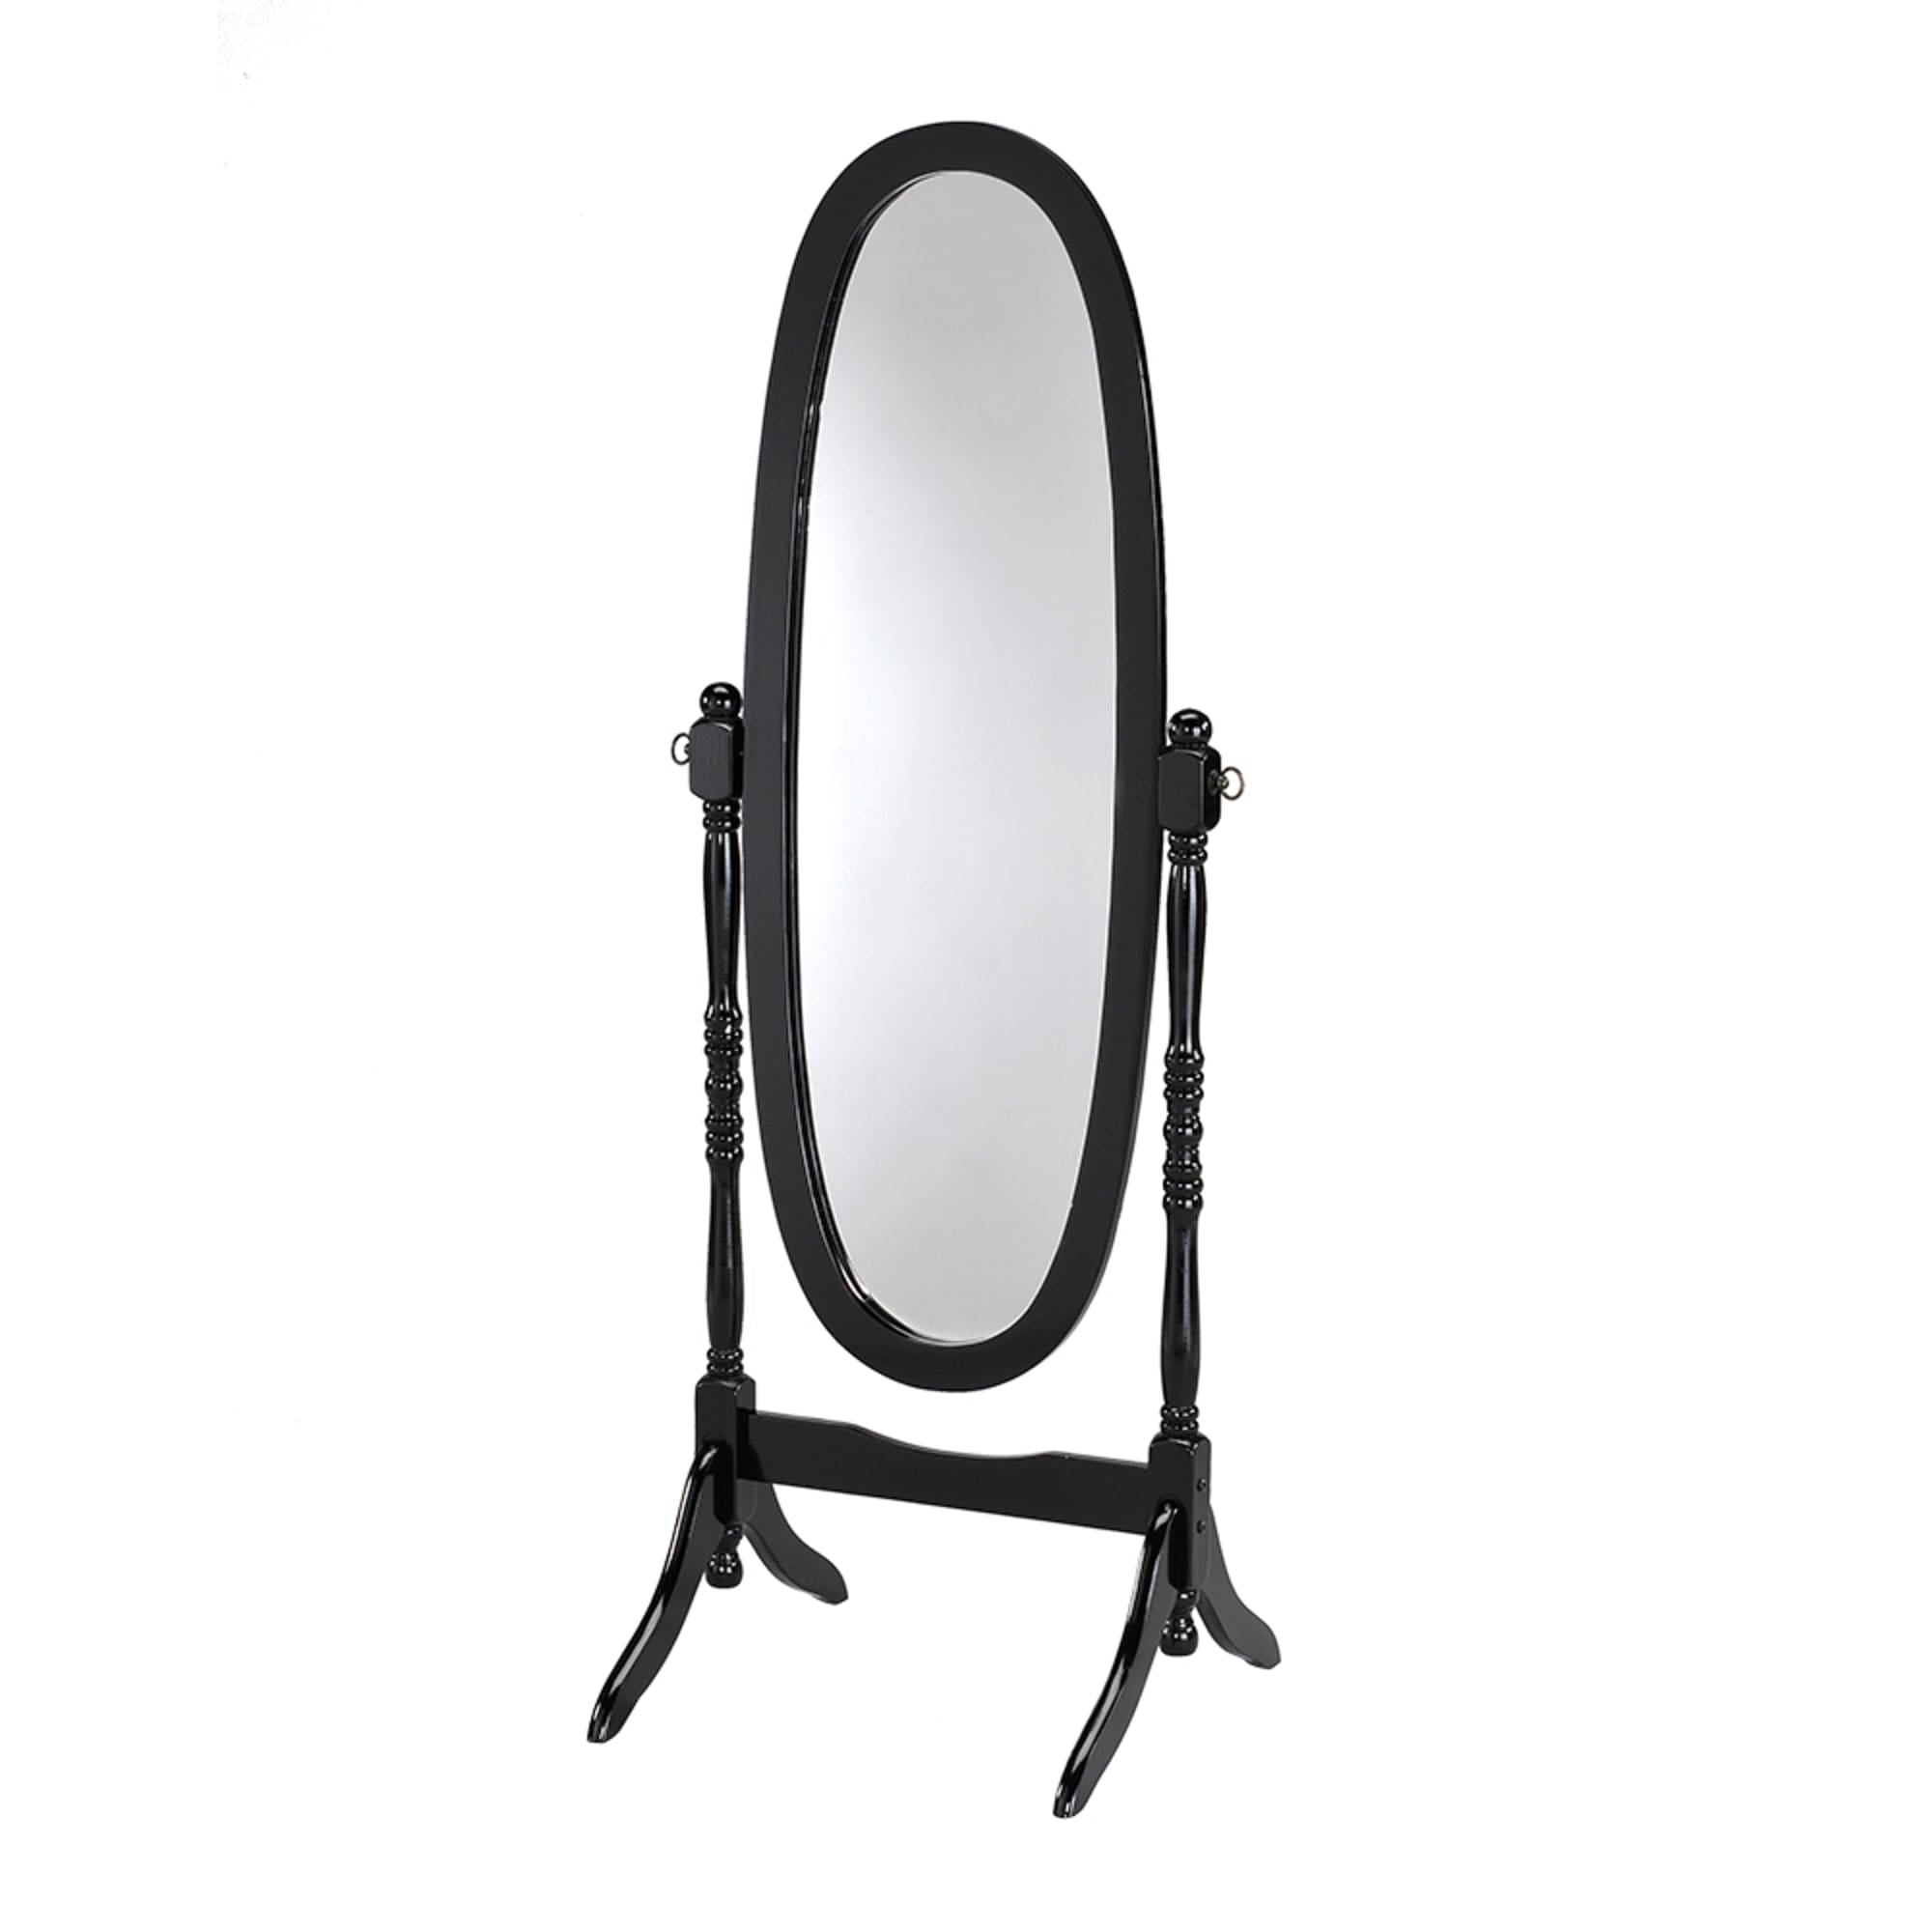 Home Basics Freestanding Oval Mirror, Black $60.00 EACH, CASE PACK OF 1